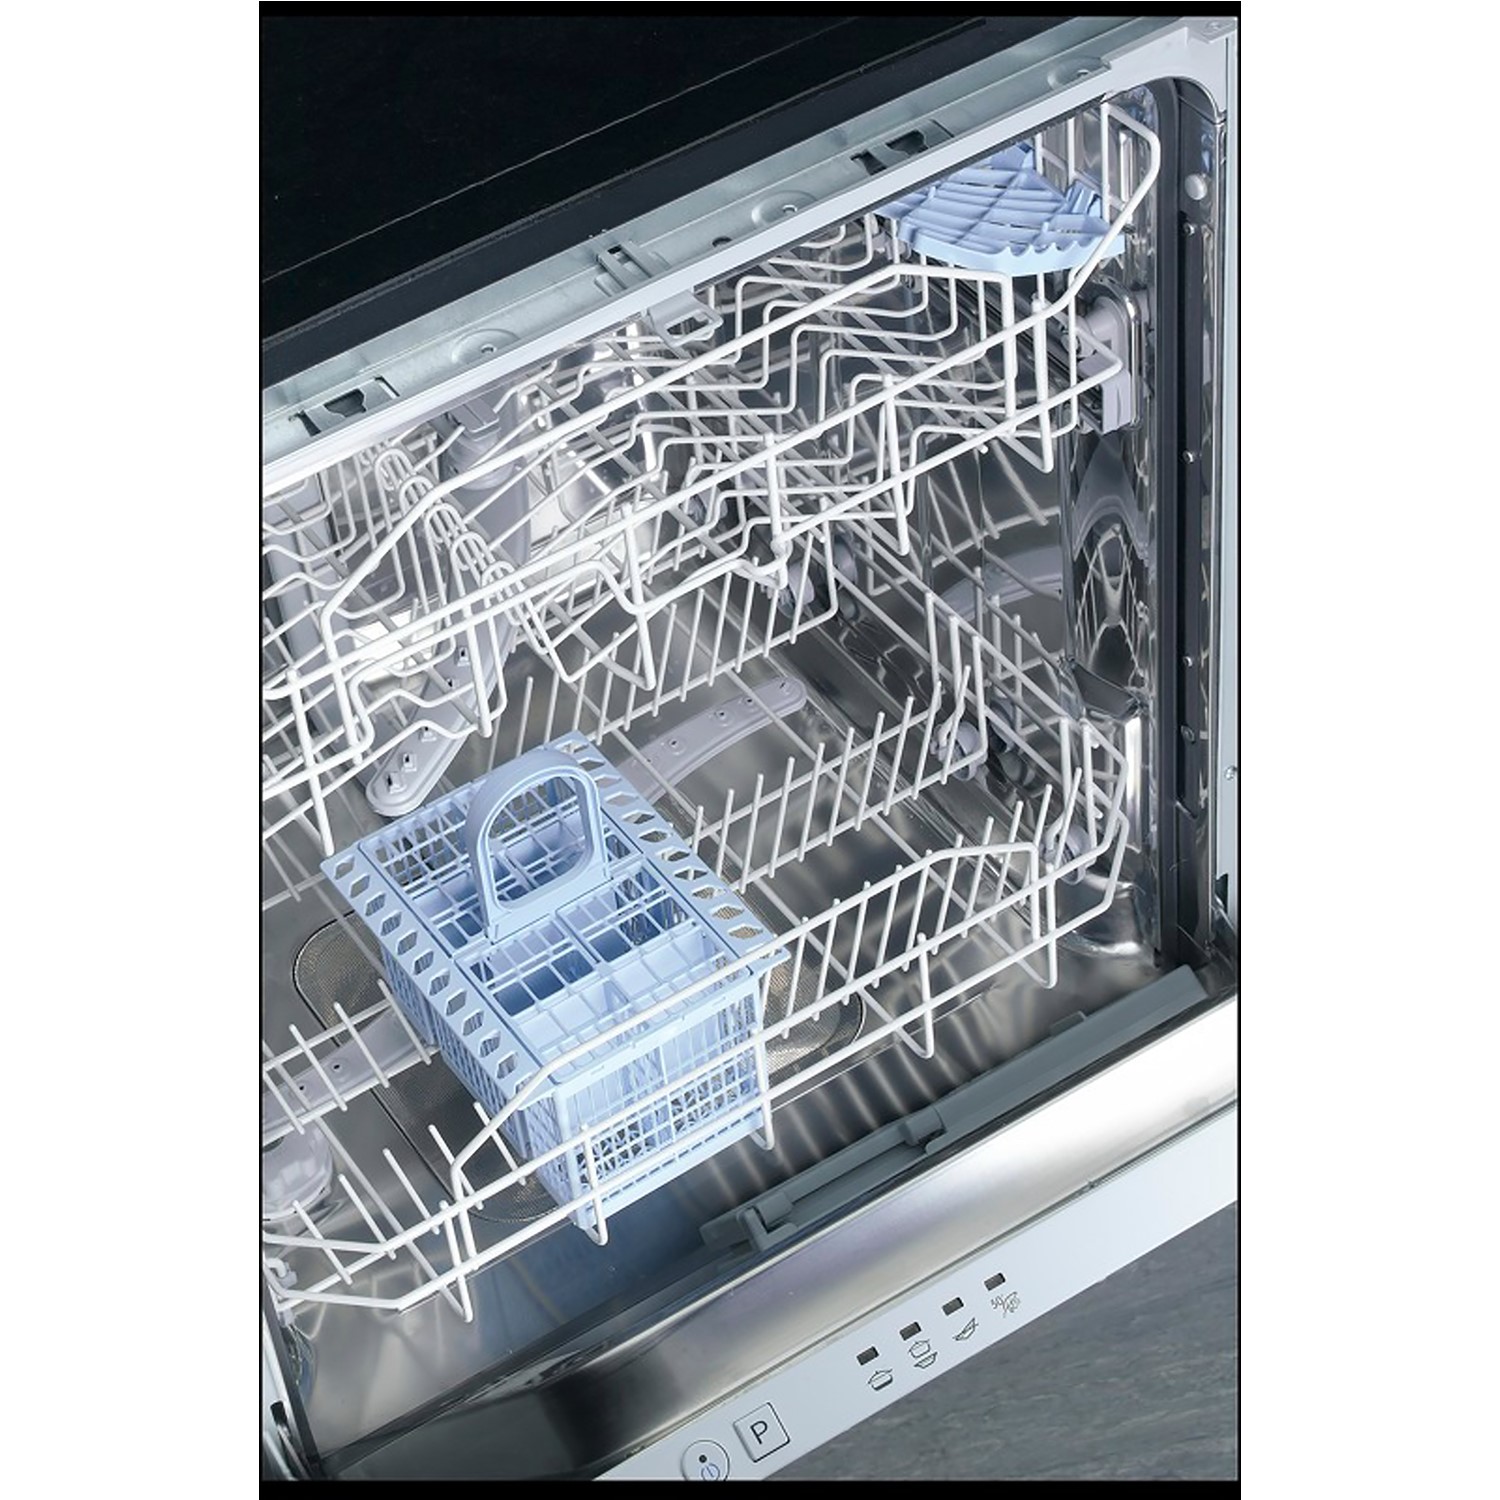 dif04b1 aaa intergrated dishwasher